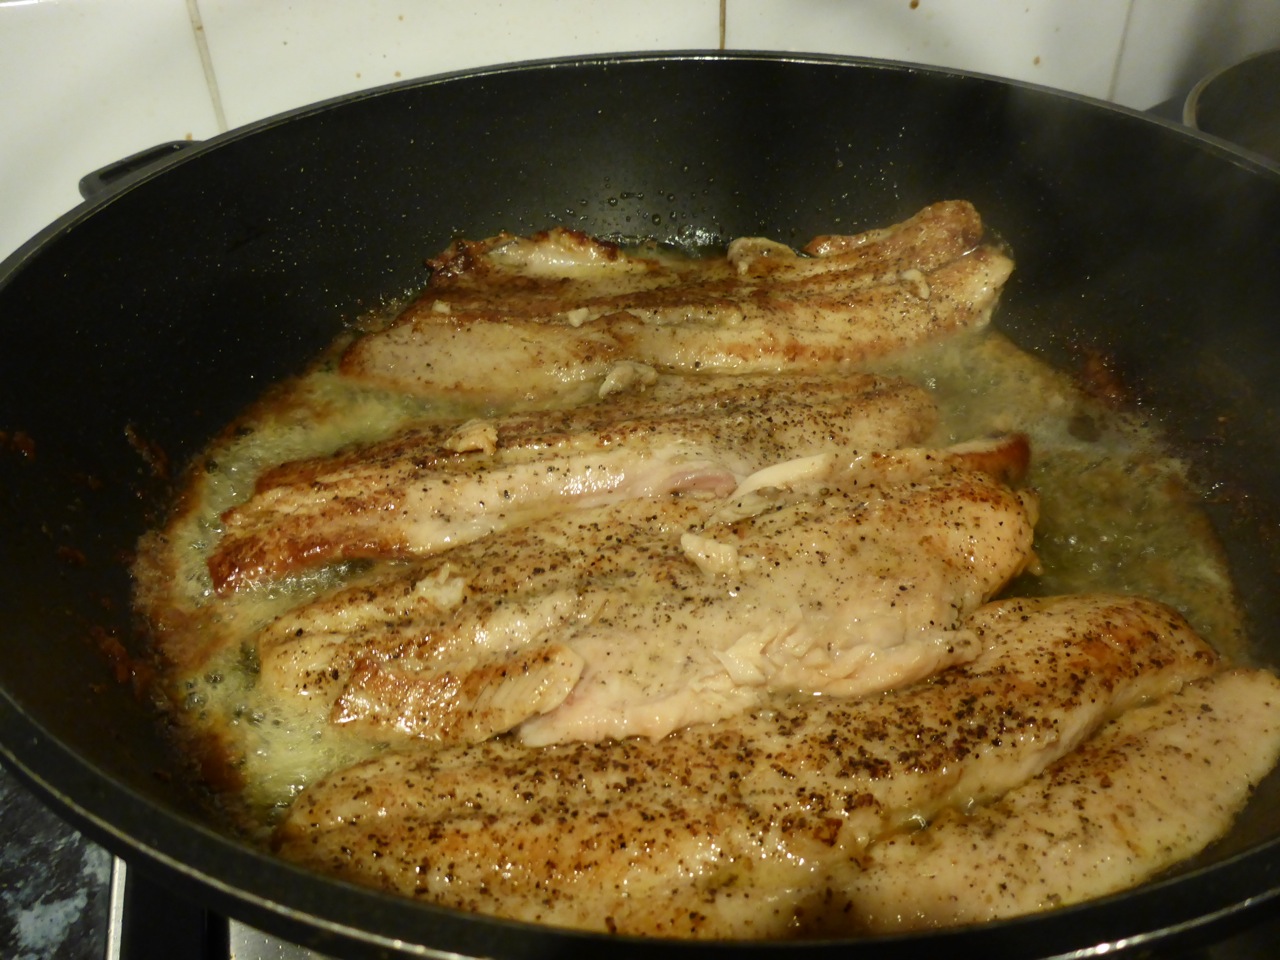 A pan full of wakatipu salmon for dinner!